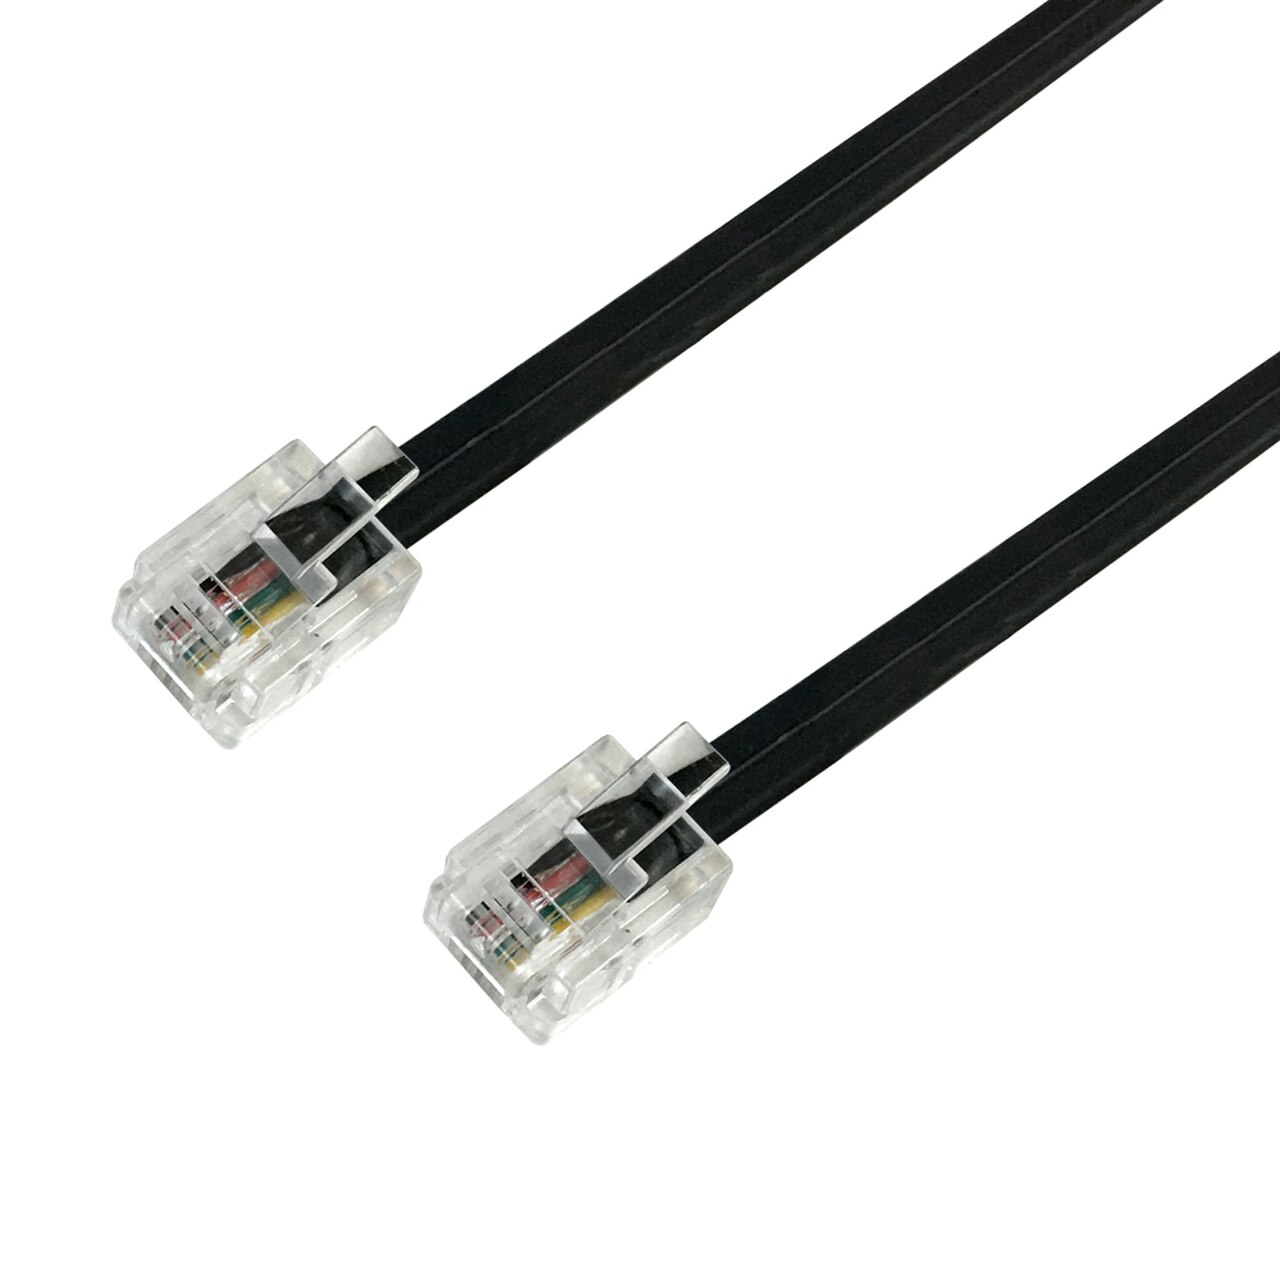 HF-CBK6P4C: 1 to 15 ft RJ11 Modular Data Telephone Cable Straight Through 6P4C - 28AWG - Black